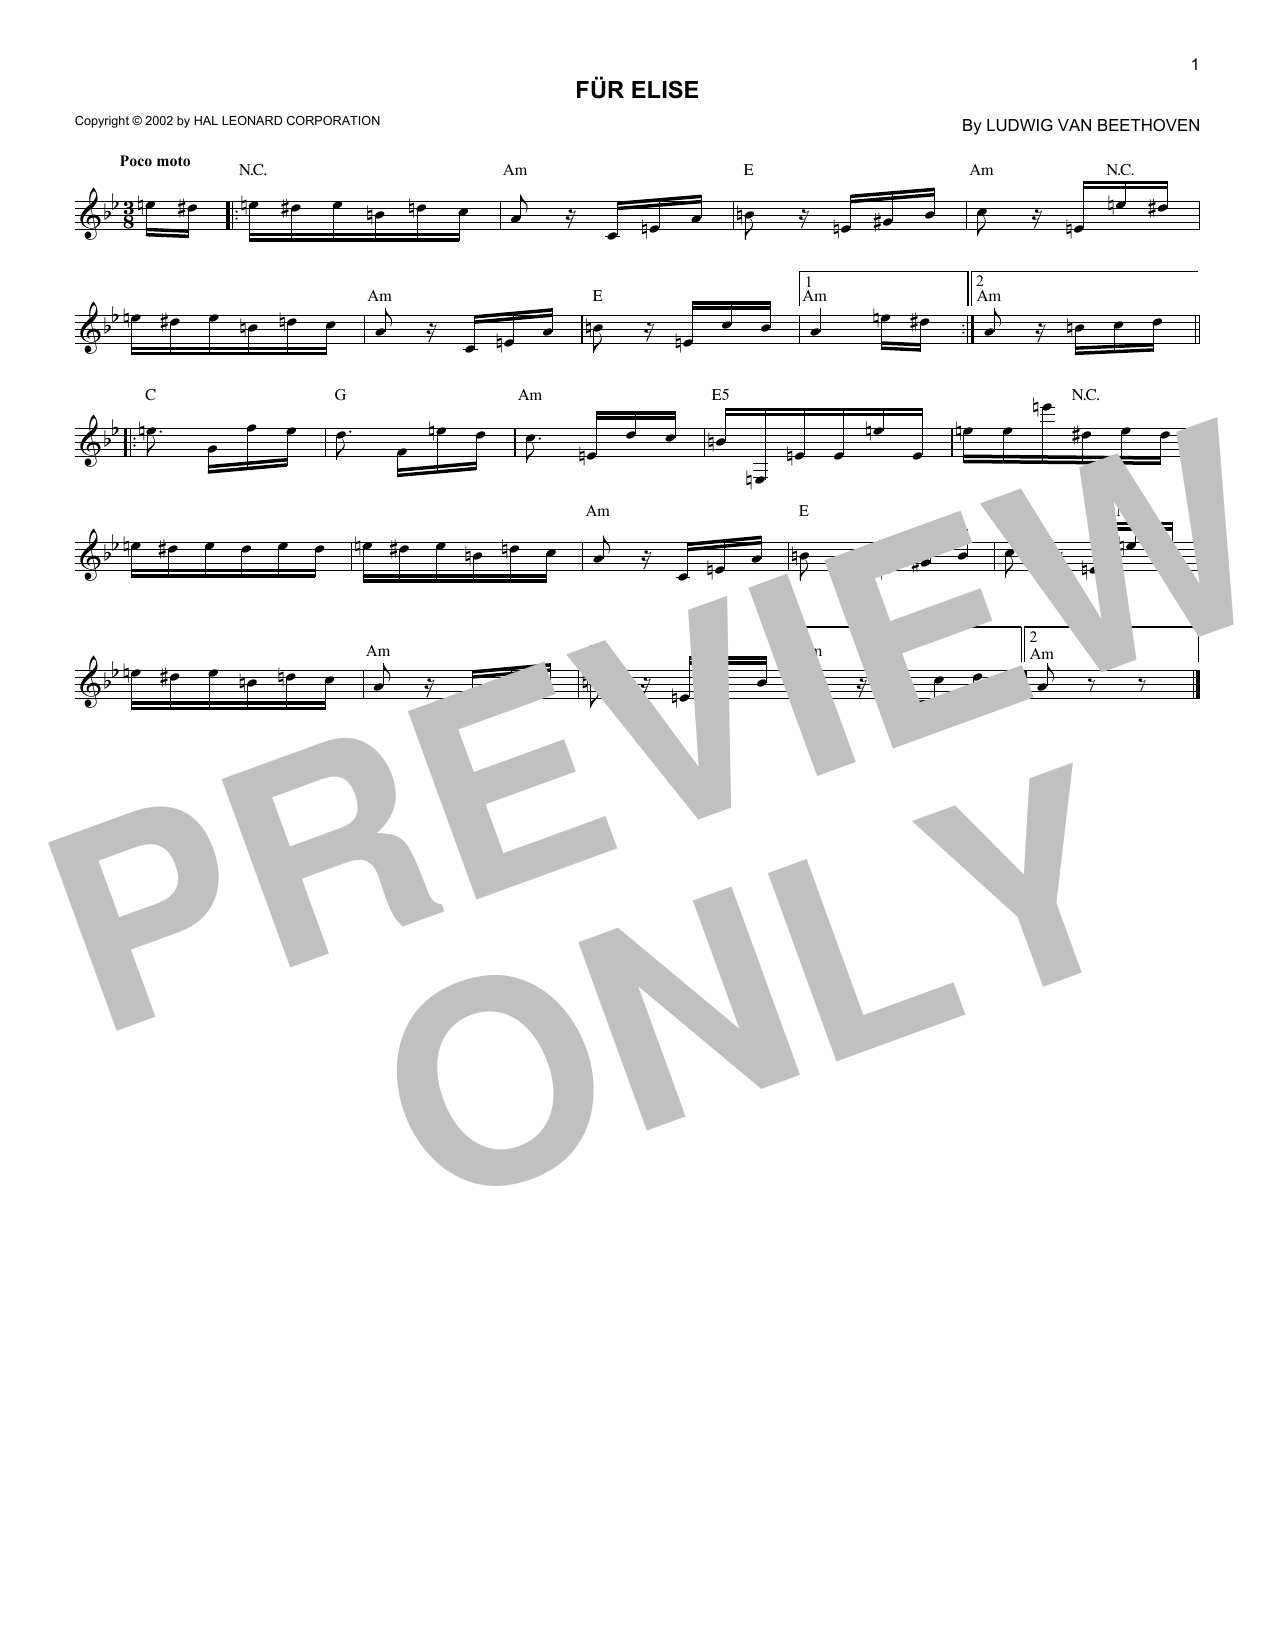 Ludwig van Beethoven Fur Elise, WoO 59 Sheet Music Notes & Chords for Cello - Download or Print PDF